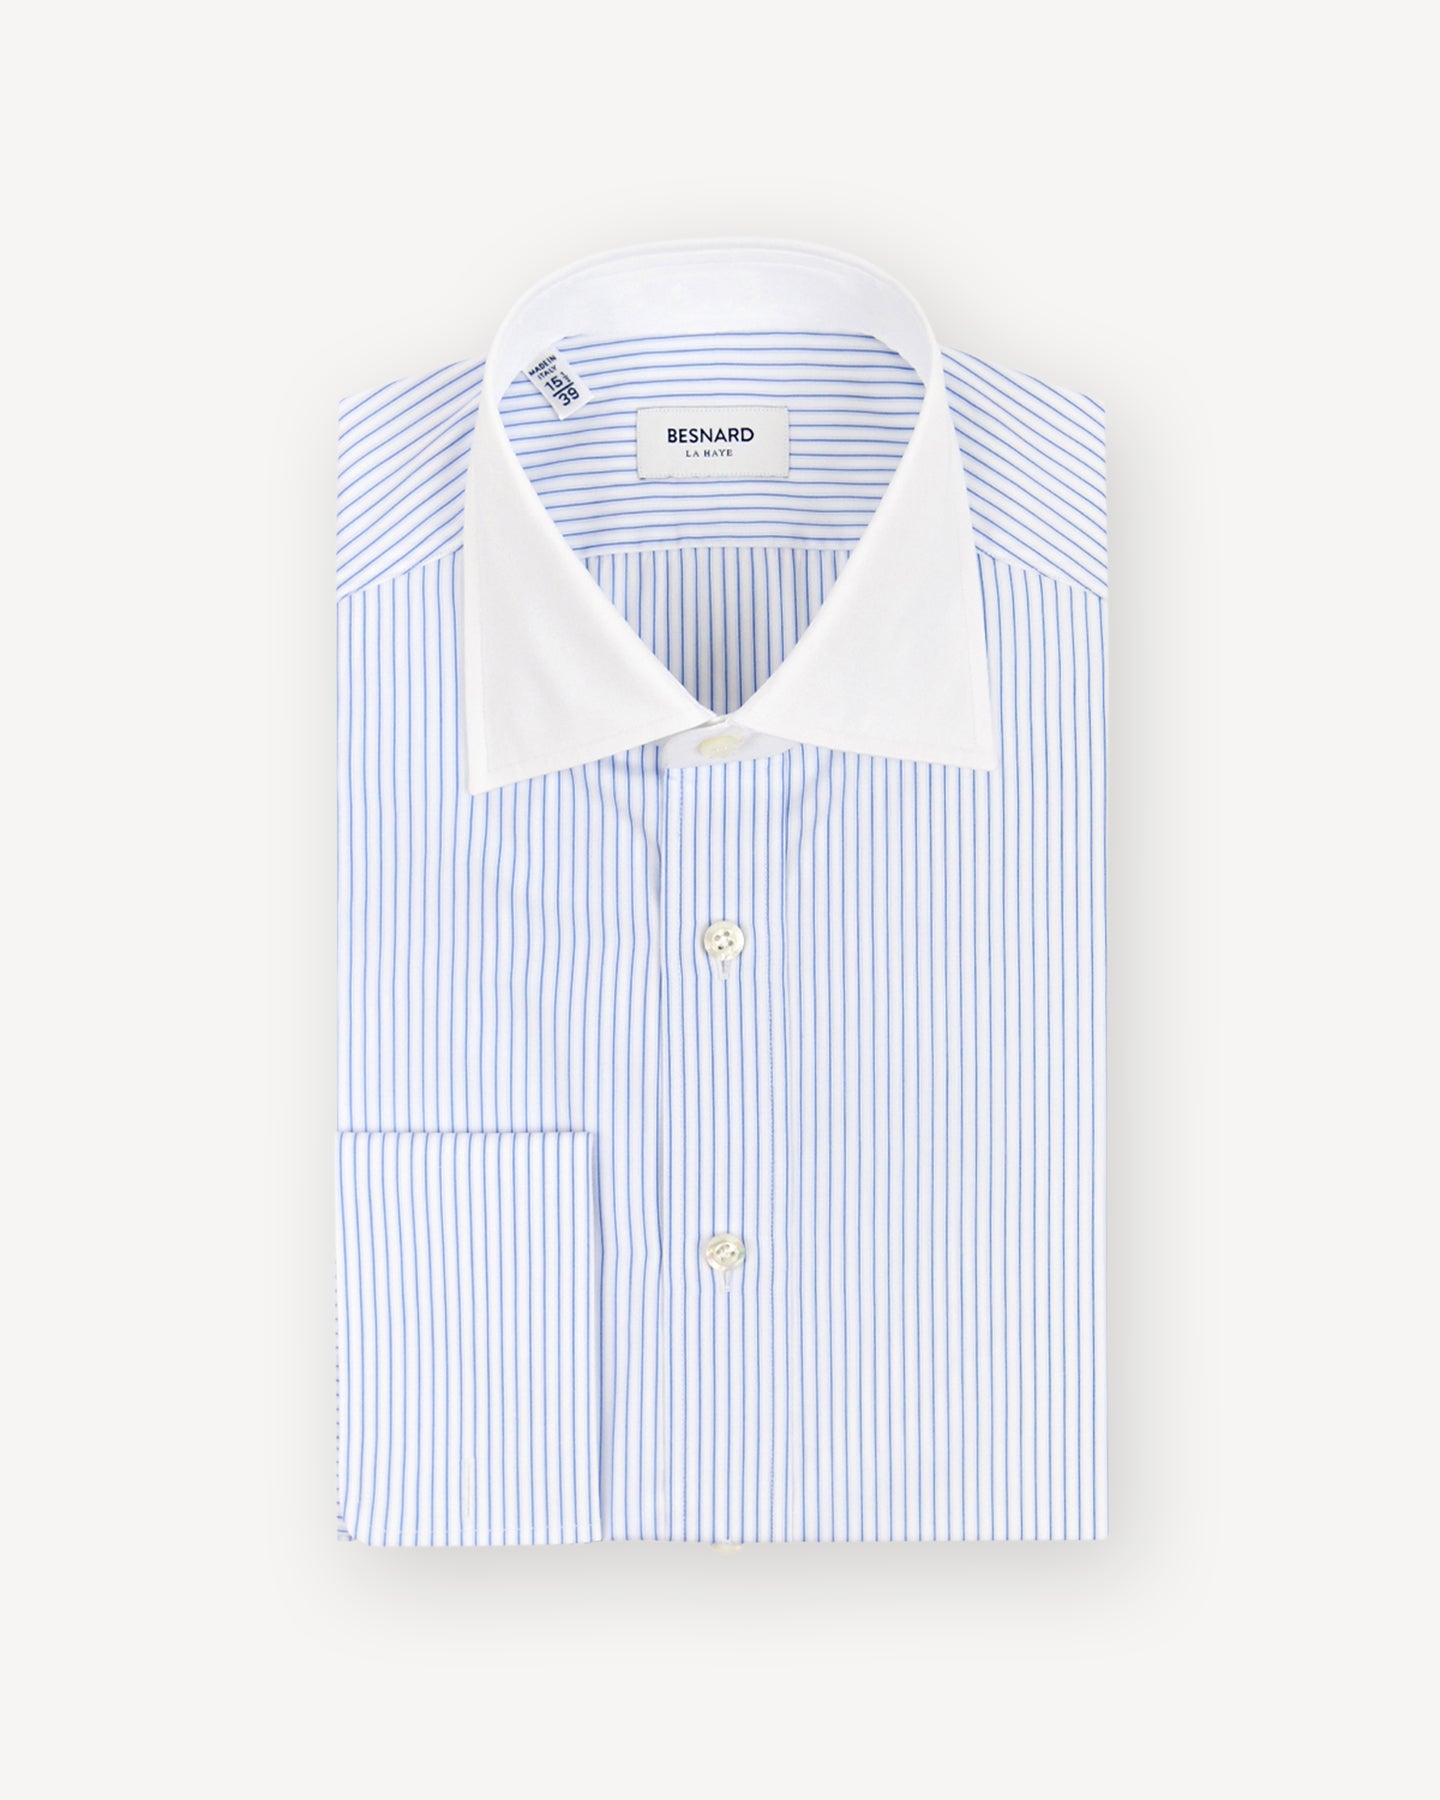 A blue striped contrast collar shirt, as worn by Gordon Gekko in 'Wall Street'